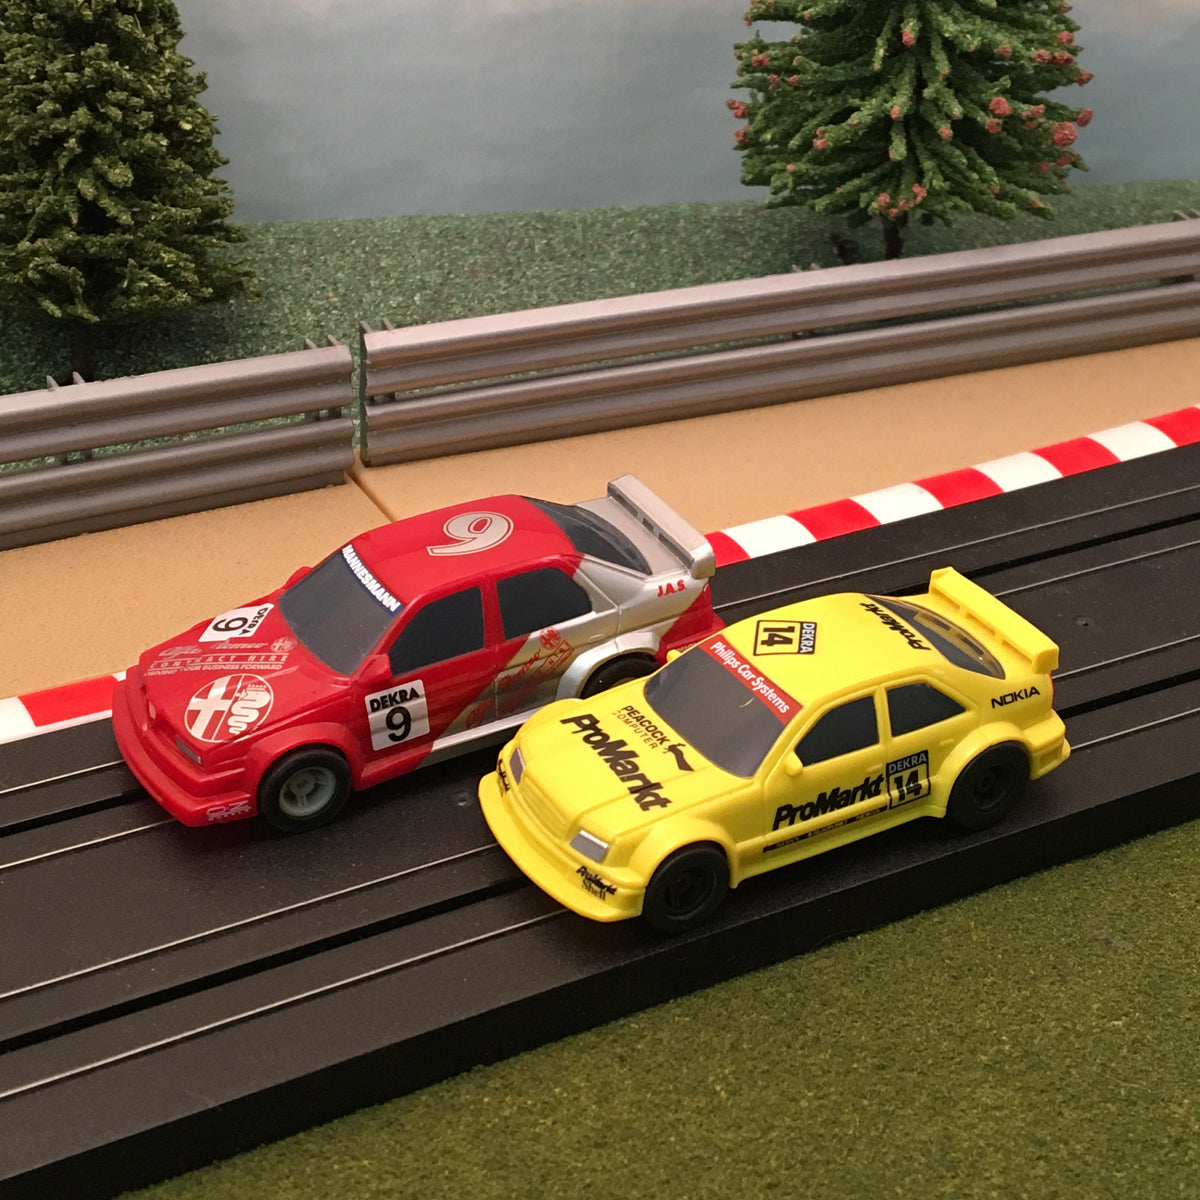 Micro Scalextric Pair 1:64 Cars - Yellow Mercedes #14 & Red Alfa Romeo #9